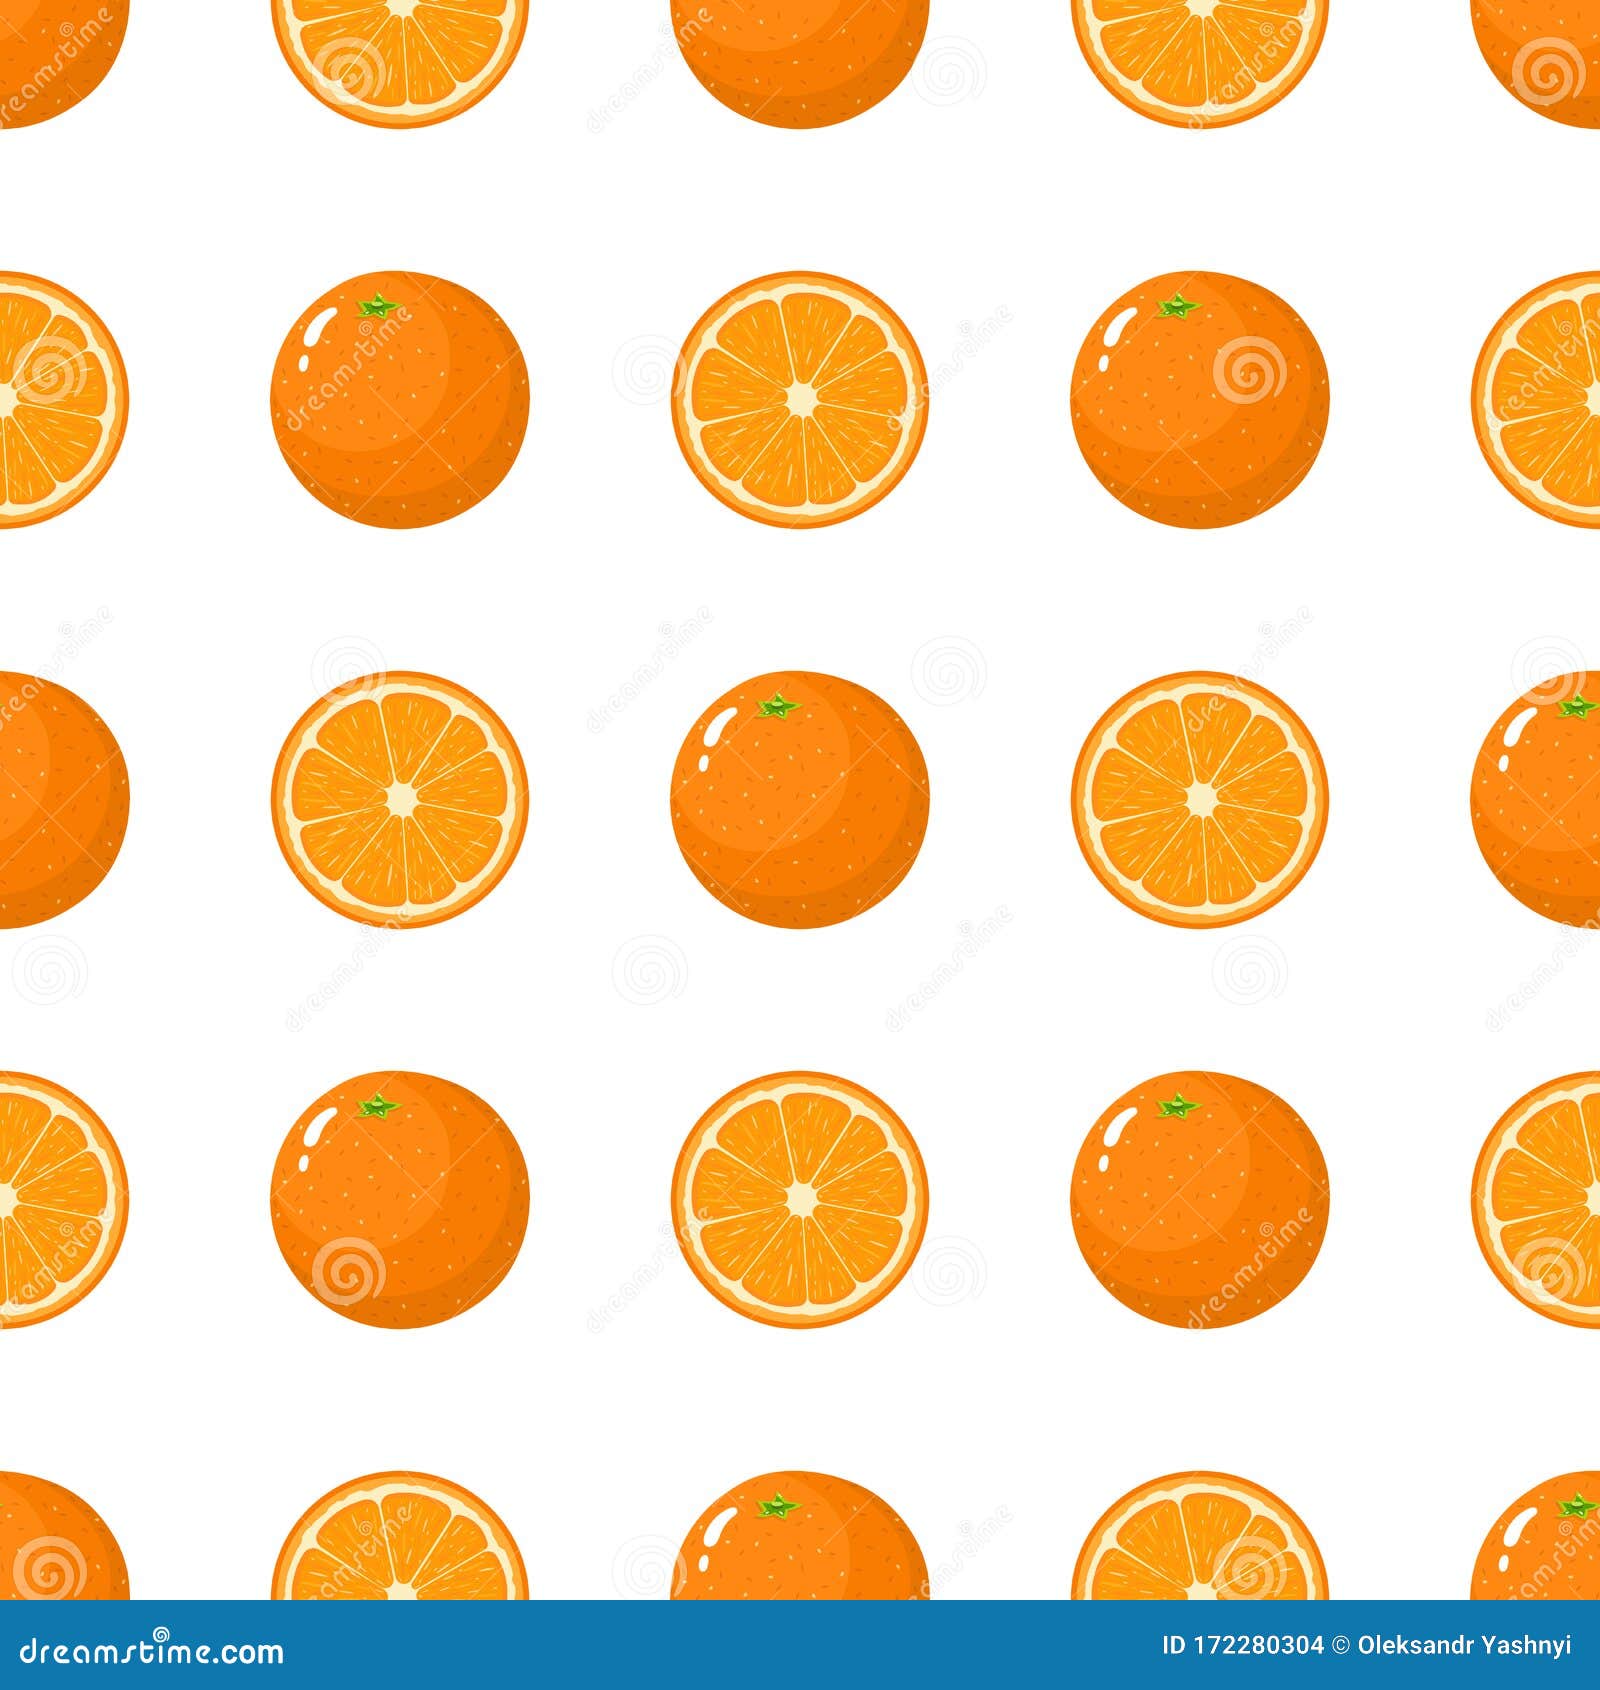 Download Vibrant Pokemon Fan Art Against a Tangerine Background Wallpaper